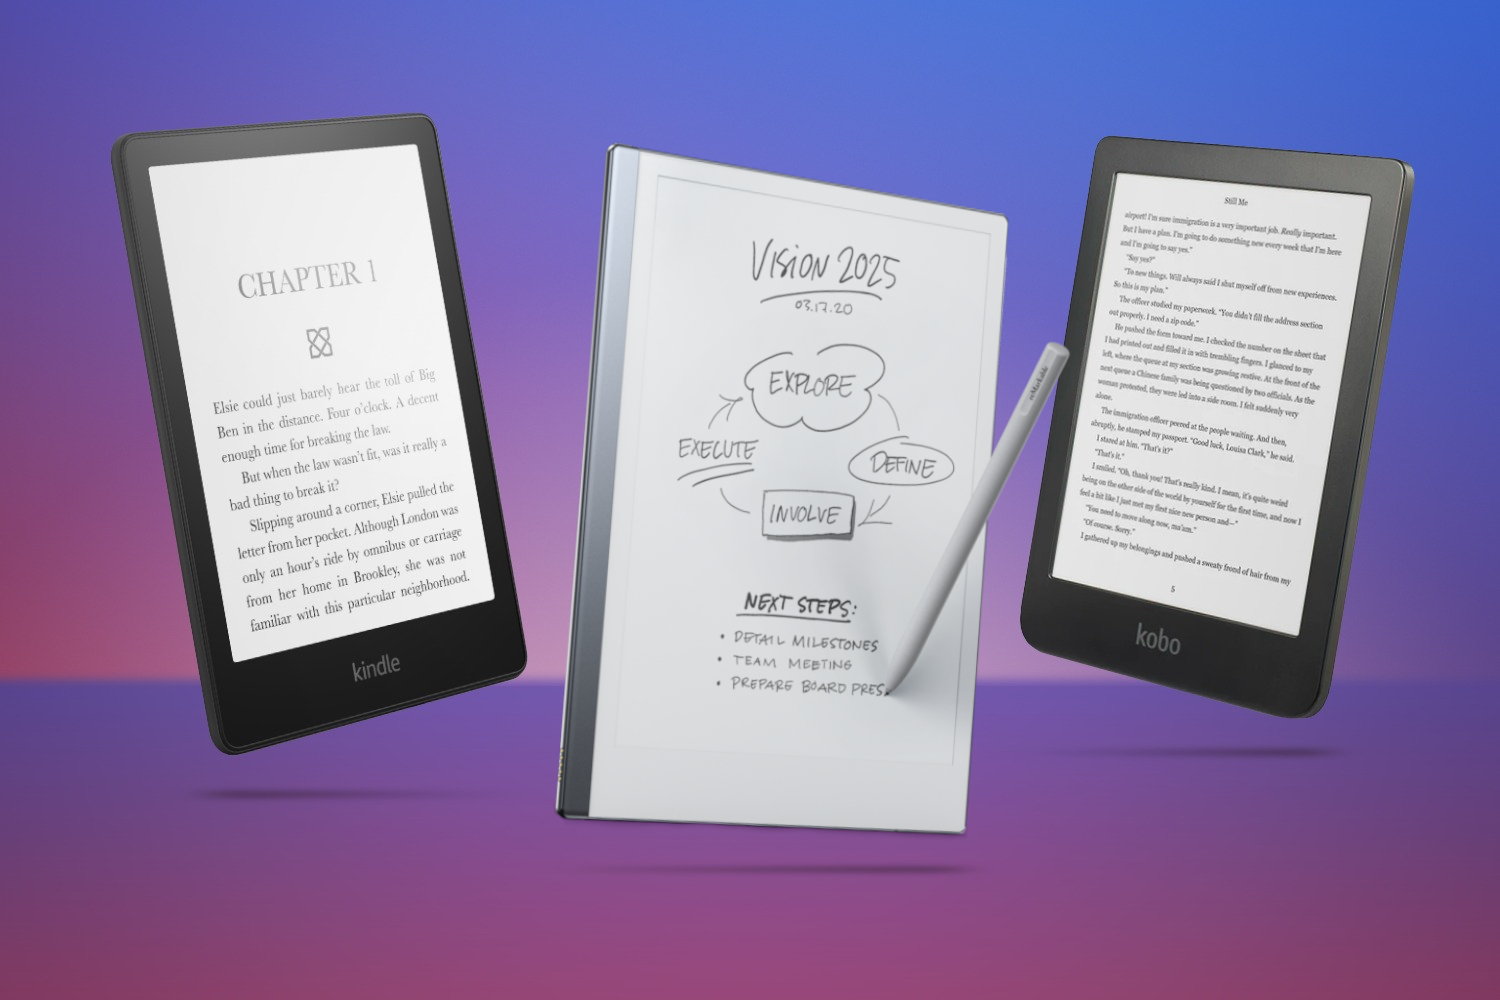 eBook Reader Reviews, eReader and Tablet News, Free eBooks